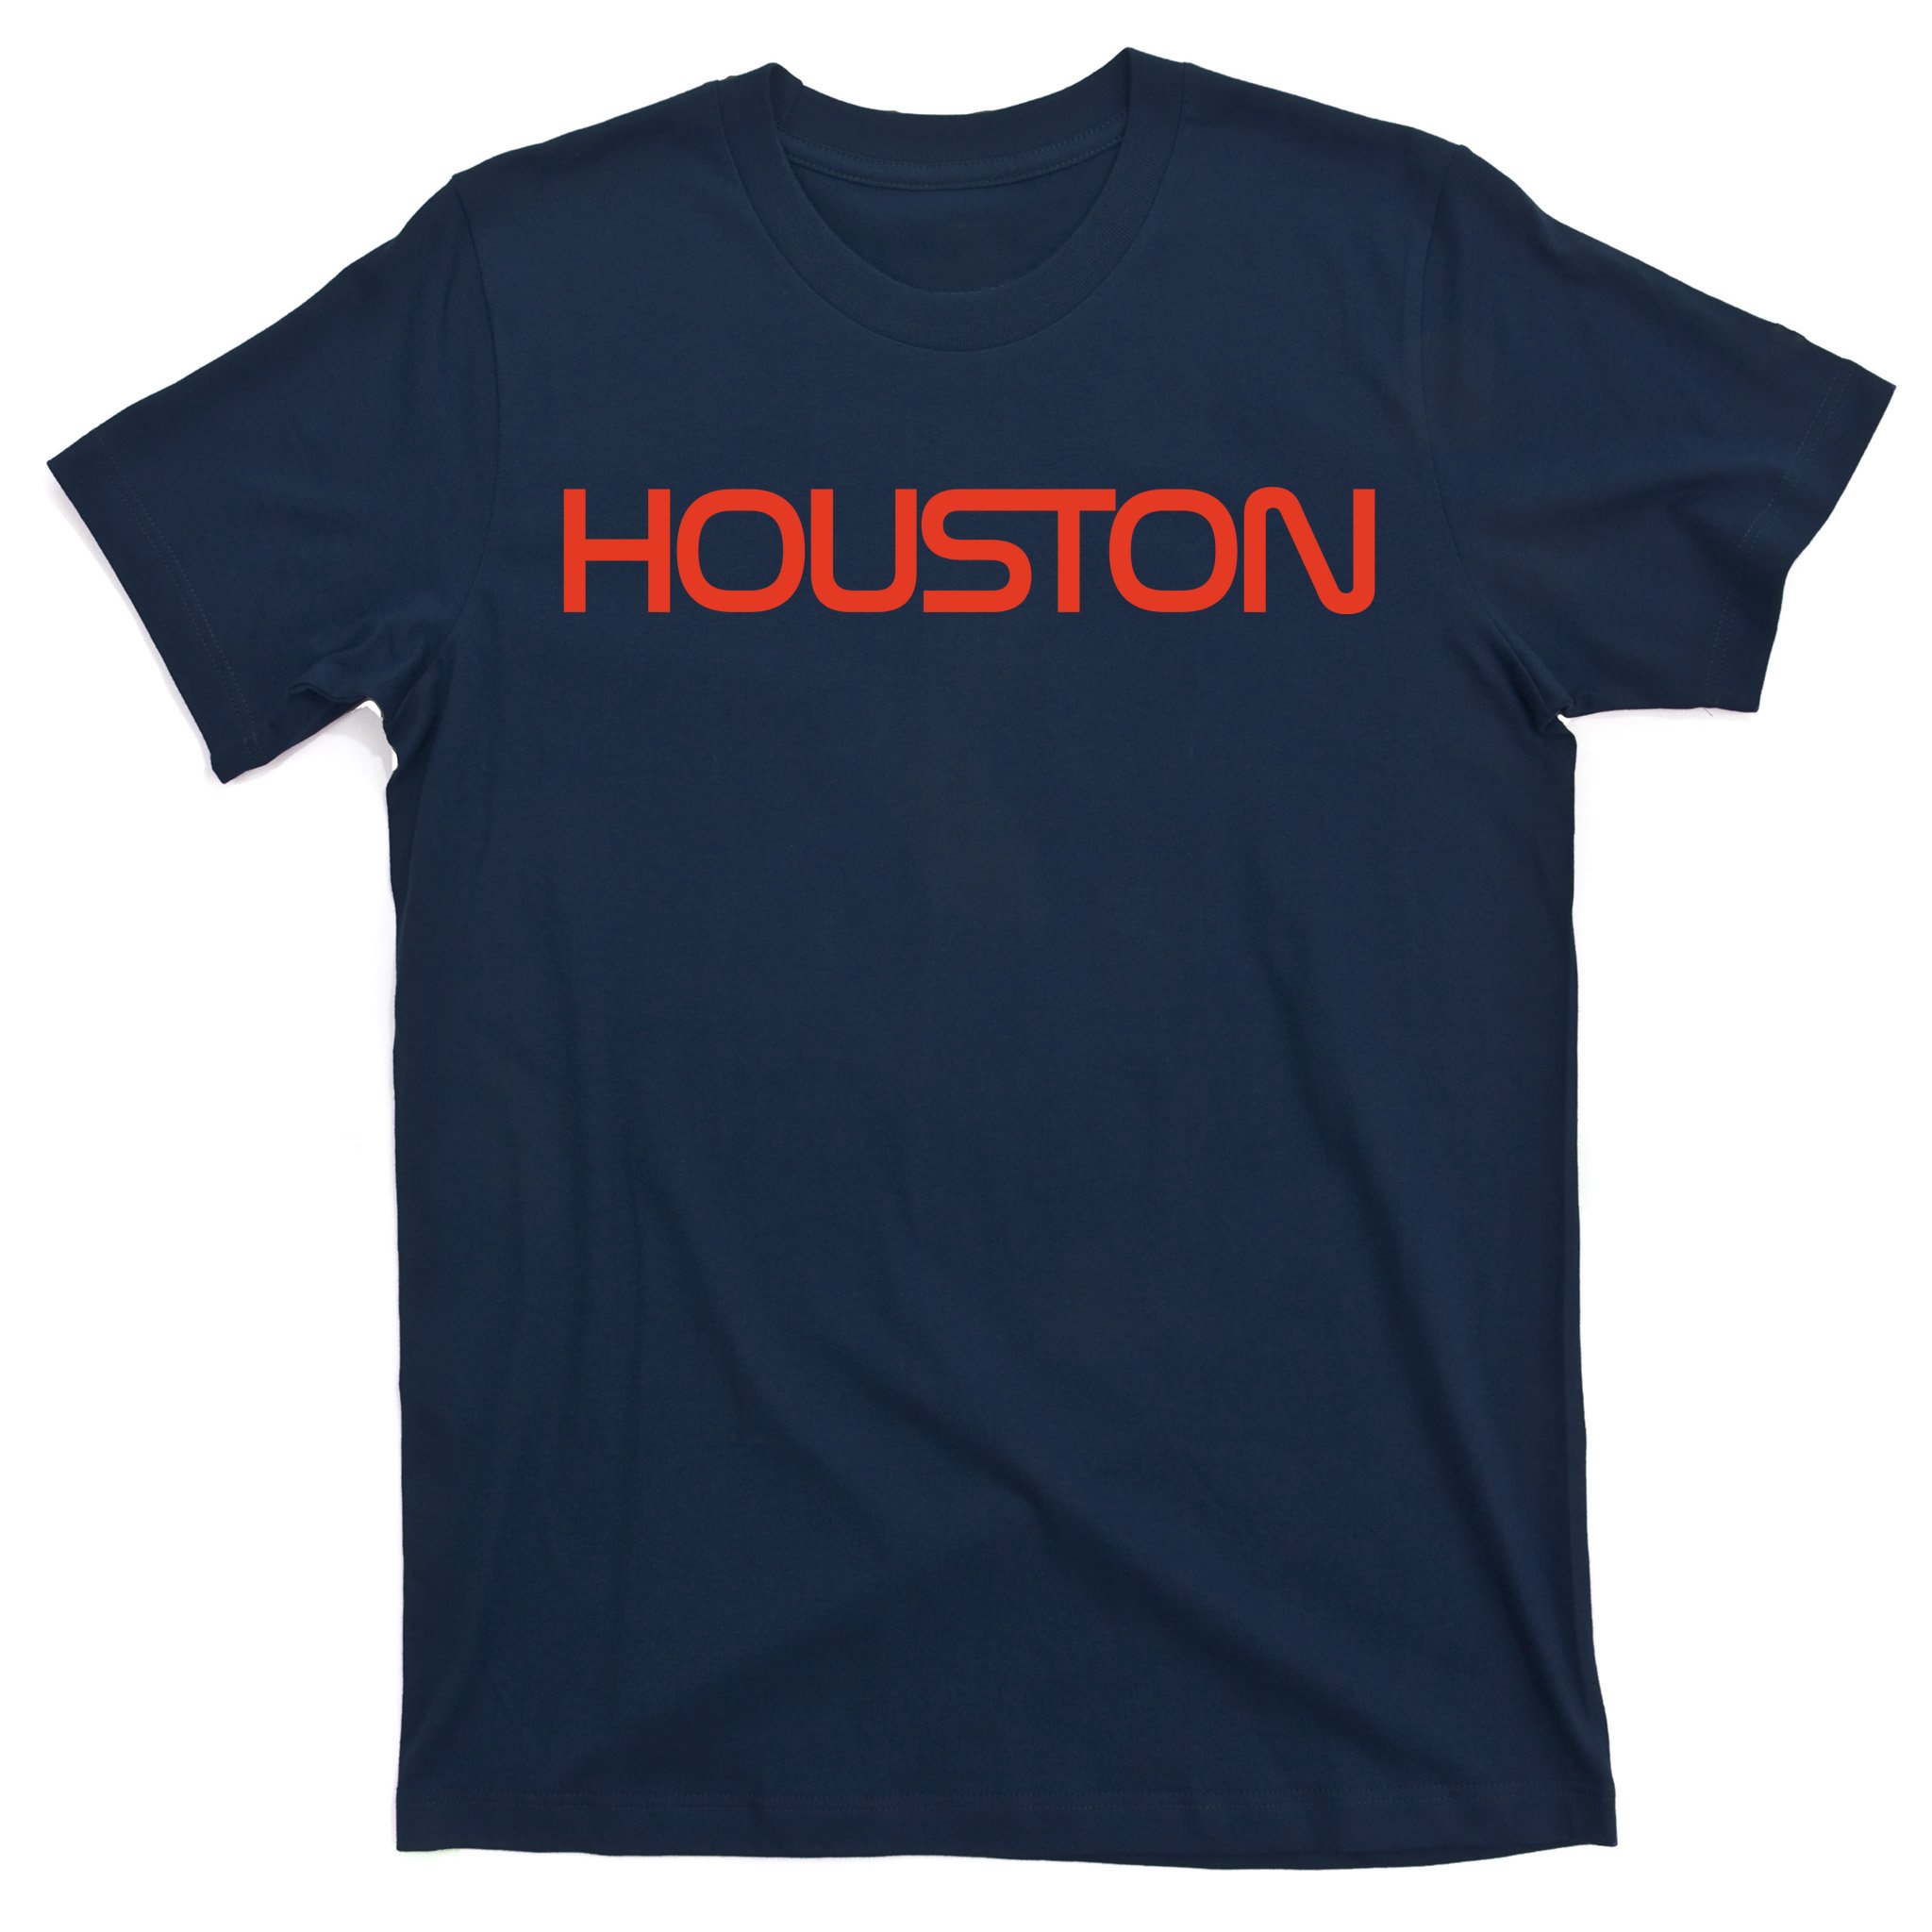 Houston Space City, Houston Baseball Women's Tri-Blend 3/4-Sleeve Raglan  Shirt